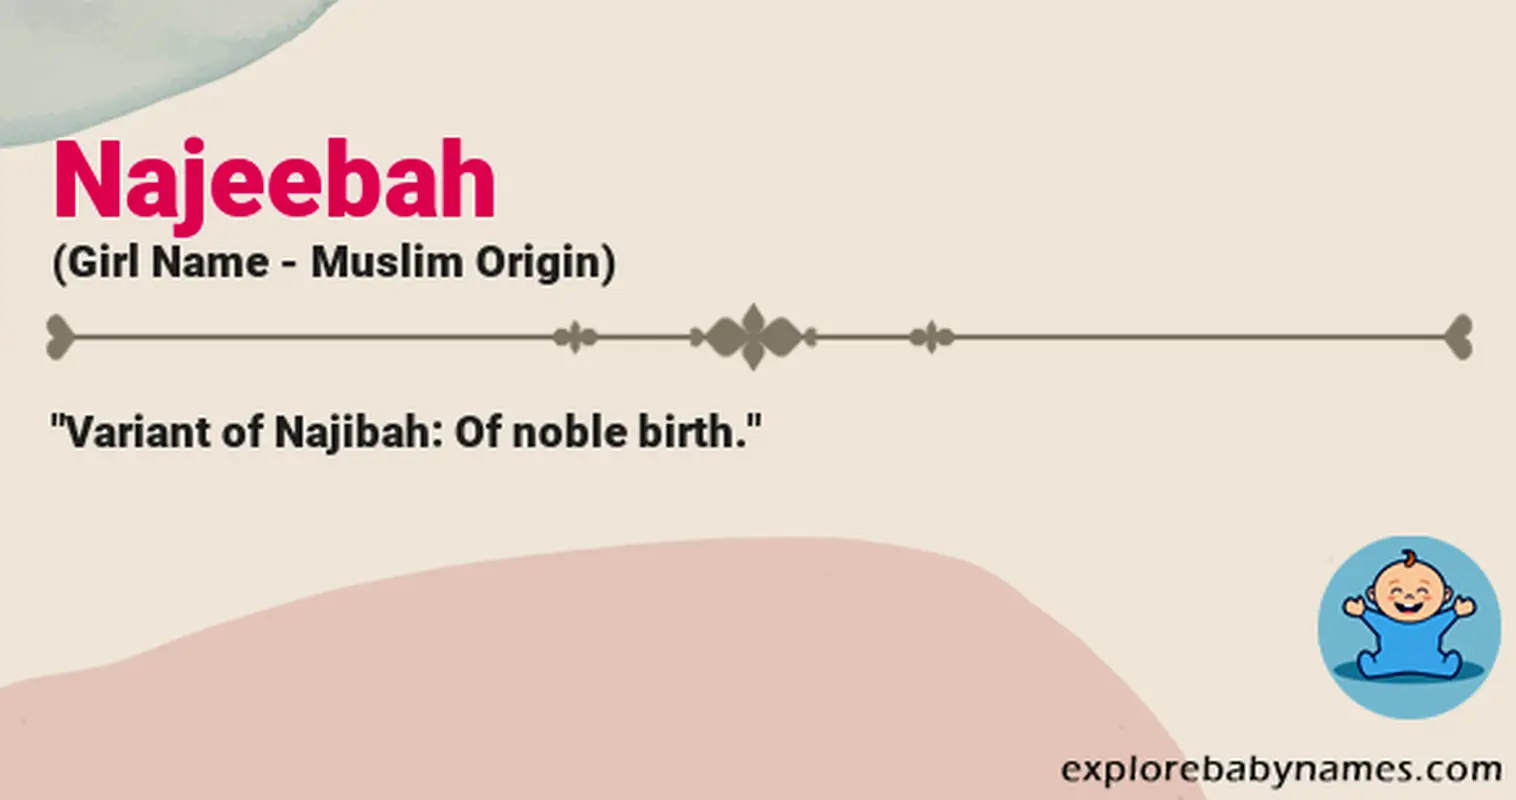 Meaning of Najeebah